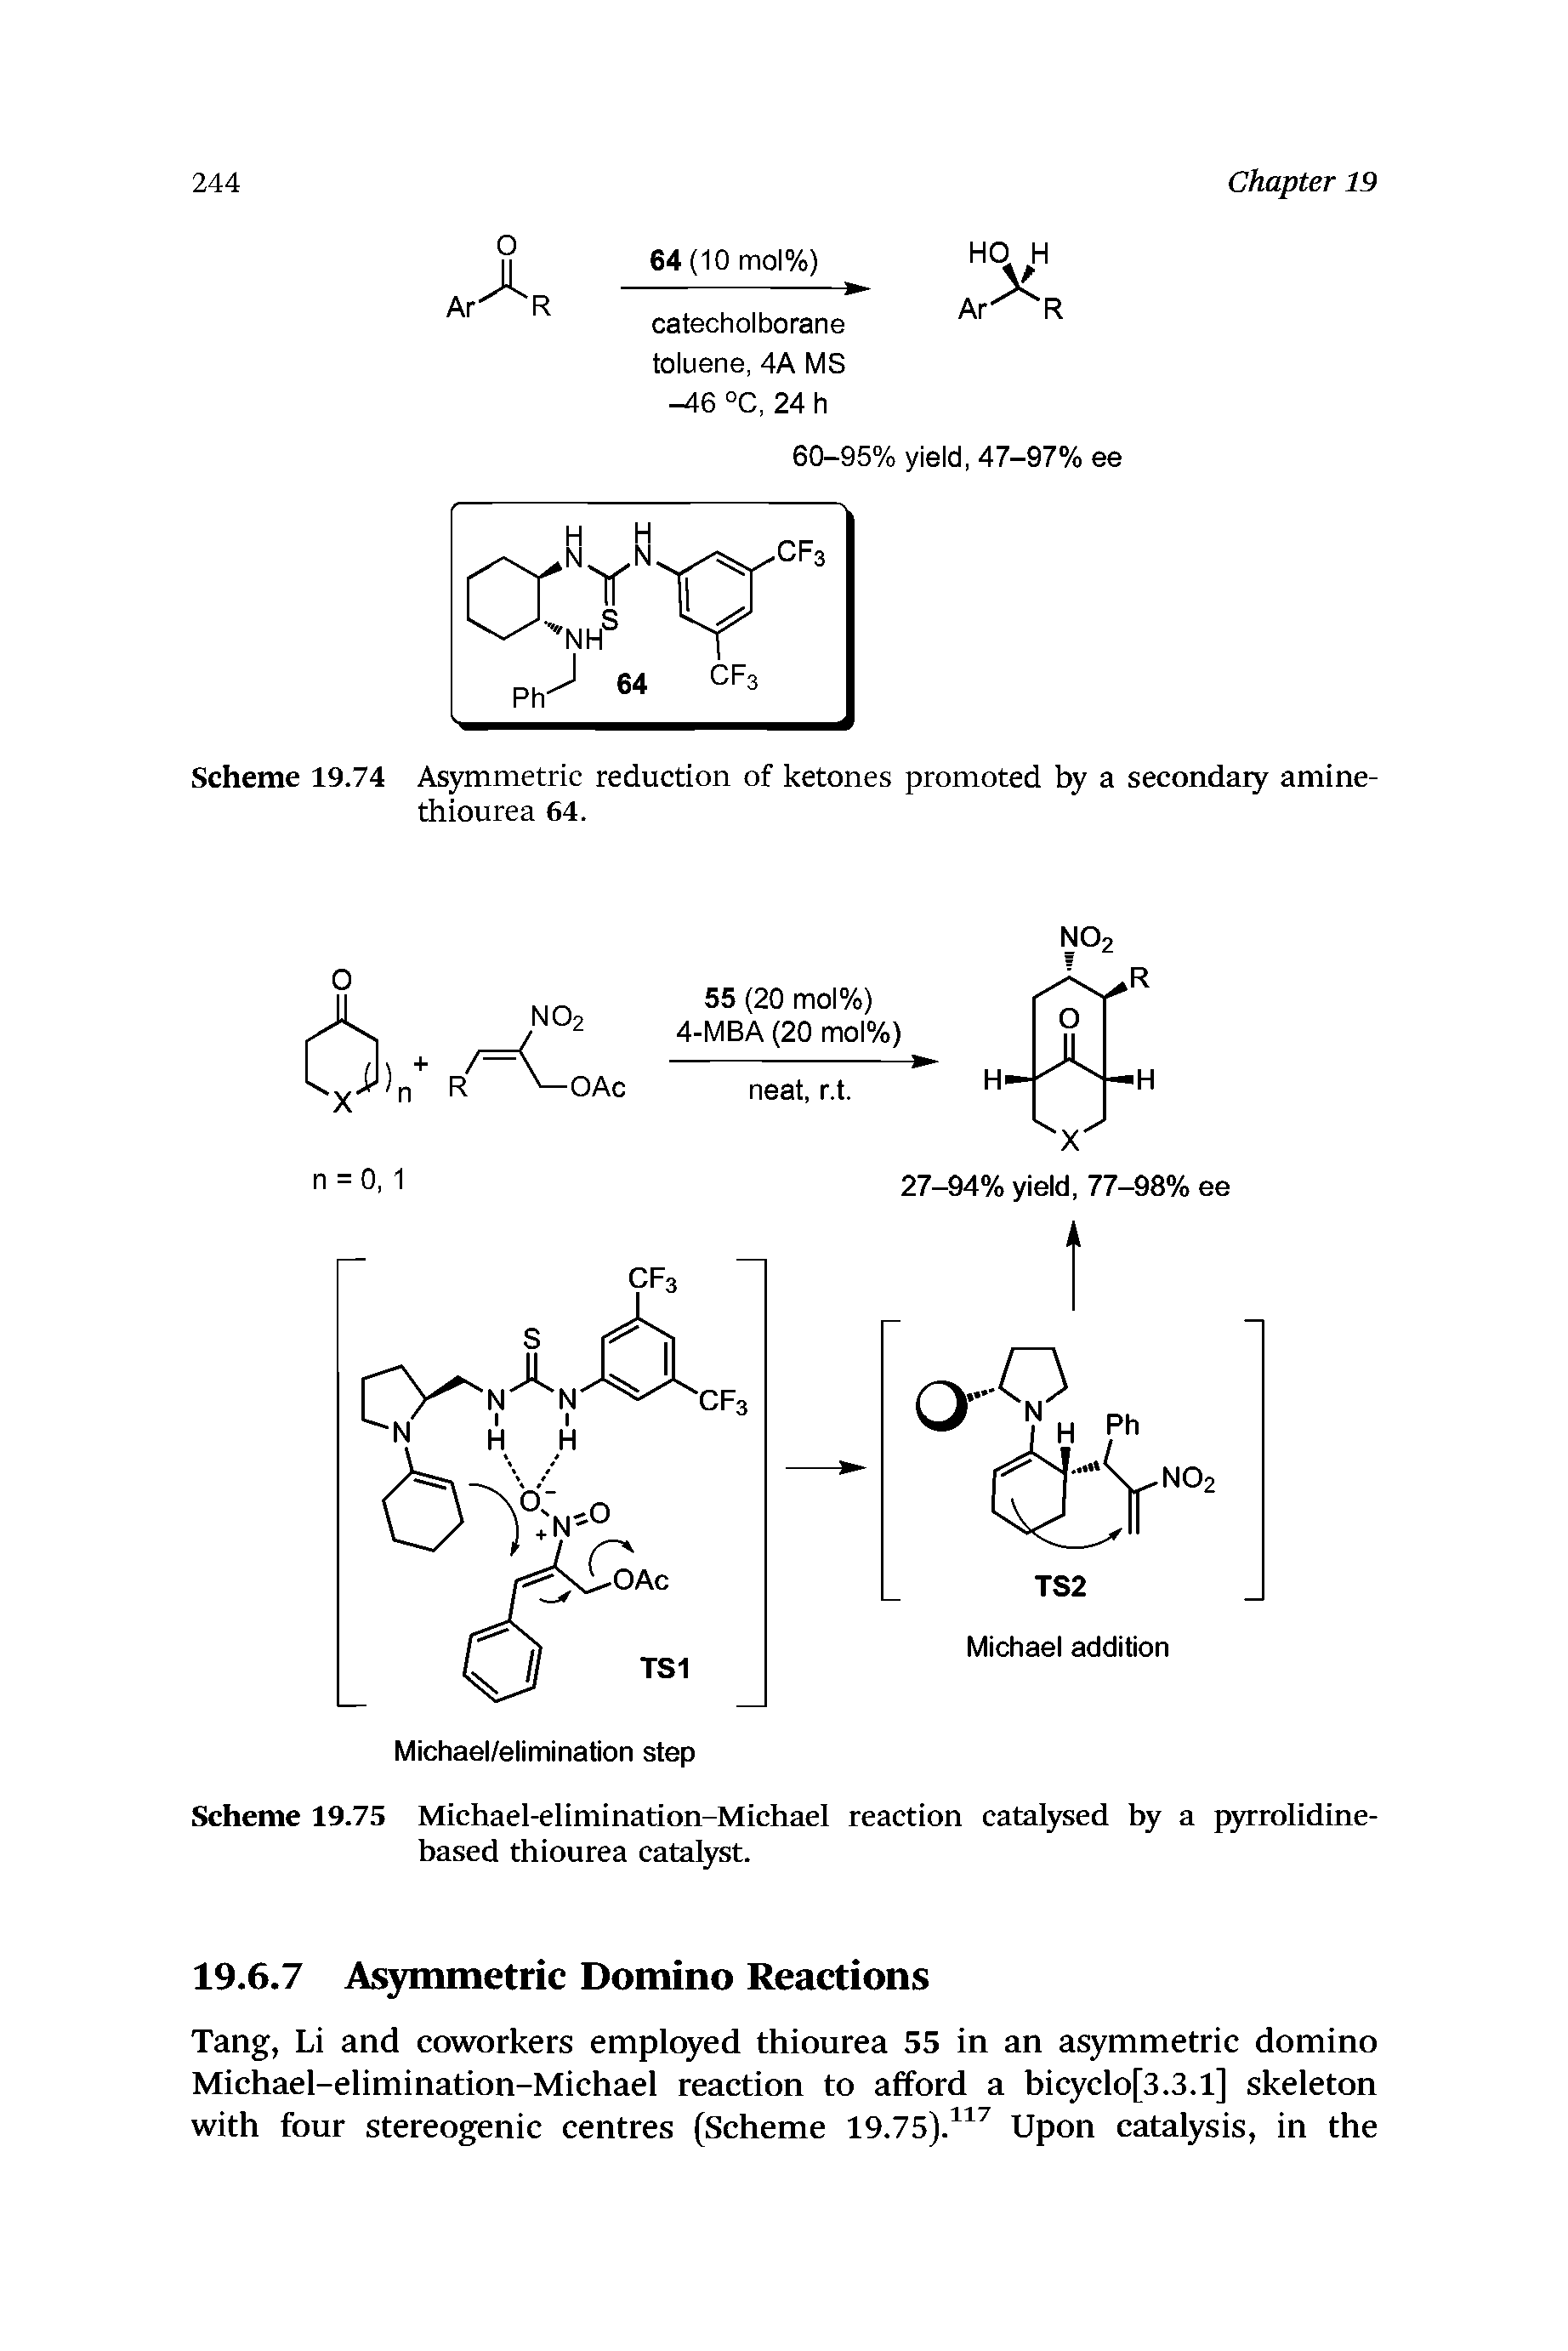 Scheme 19.75 Michael-elimination-Michael reaction catalysed by a pyrrolidine-based thiourea catalyst.